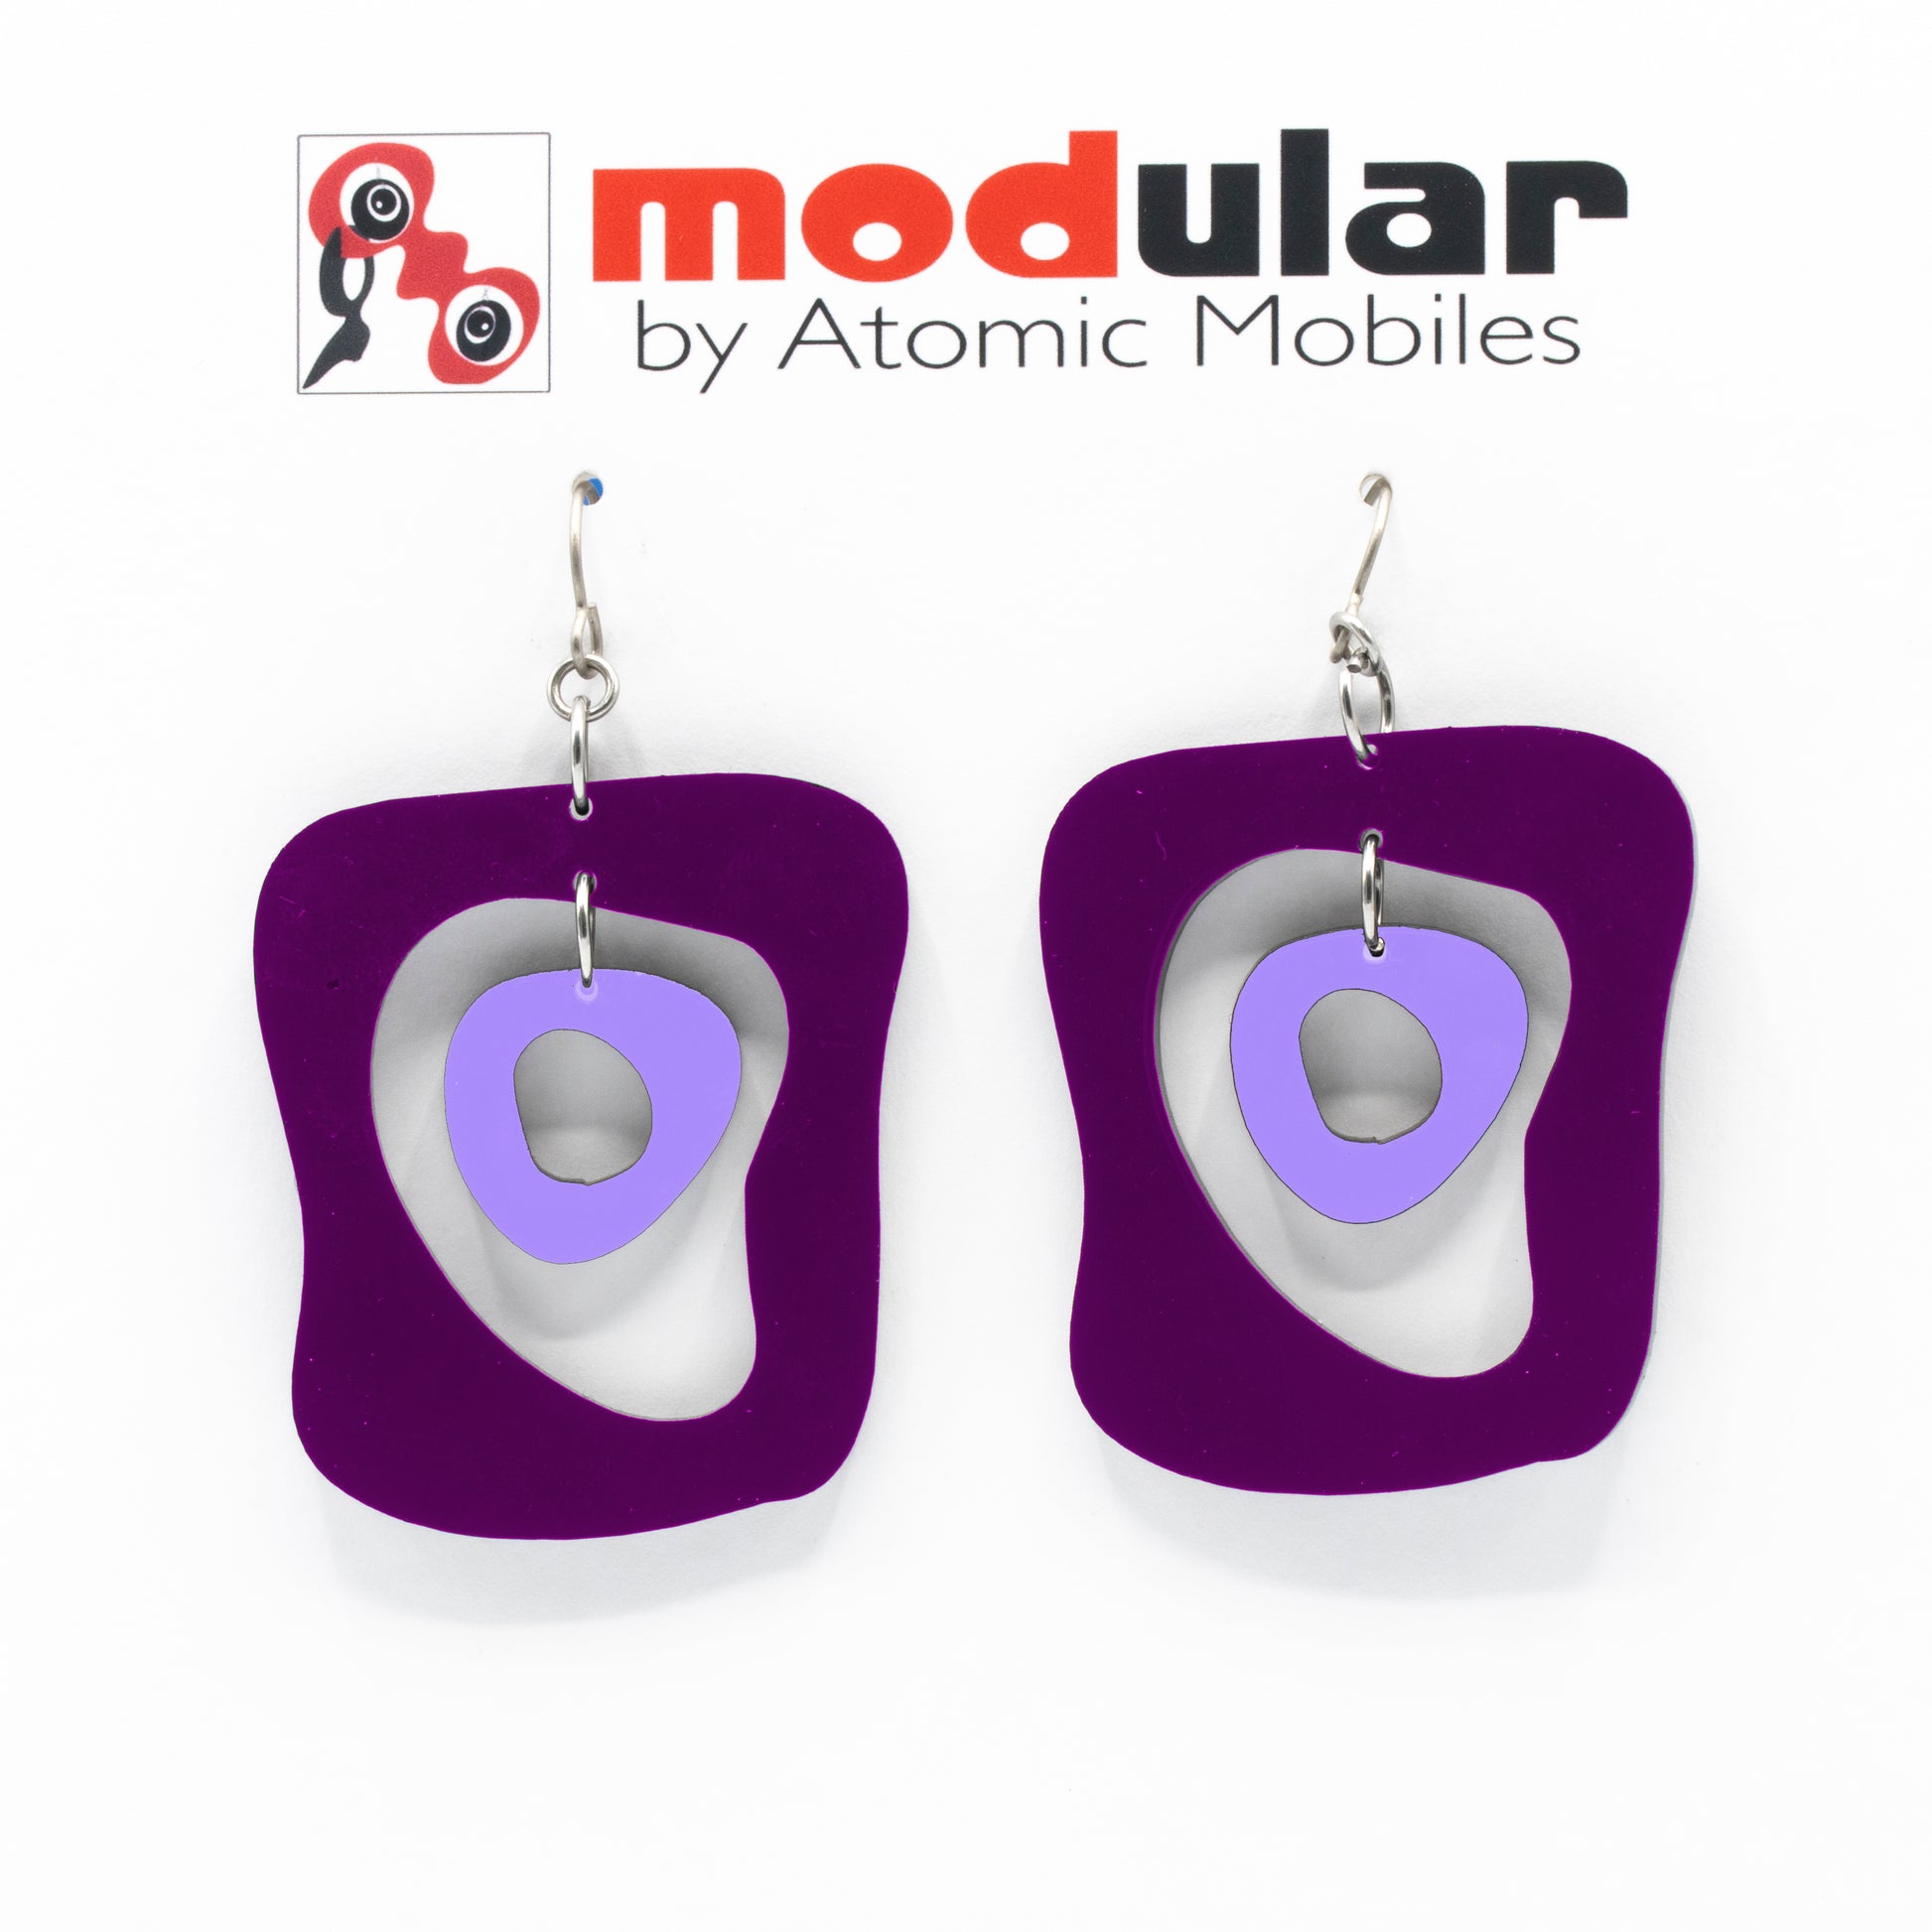 MODular Earrings - Mid Mod Statement Earrings in Purple by AtomicMobiles.com - mid century inspired modern art dangle earrings